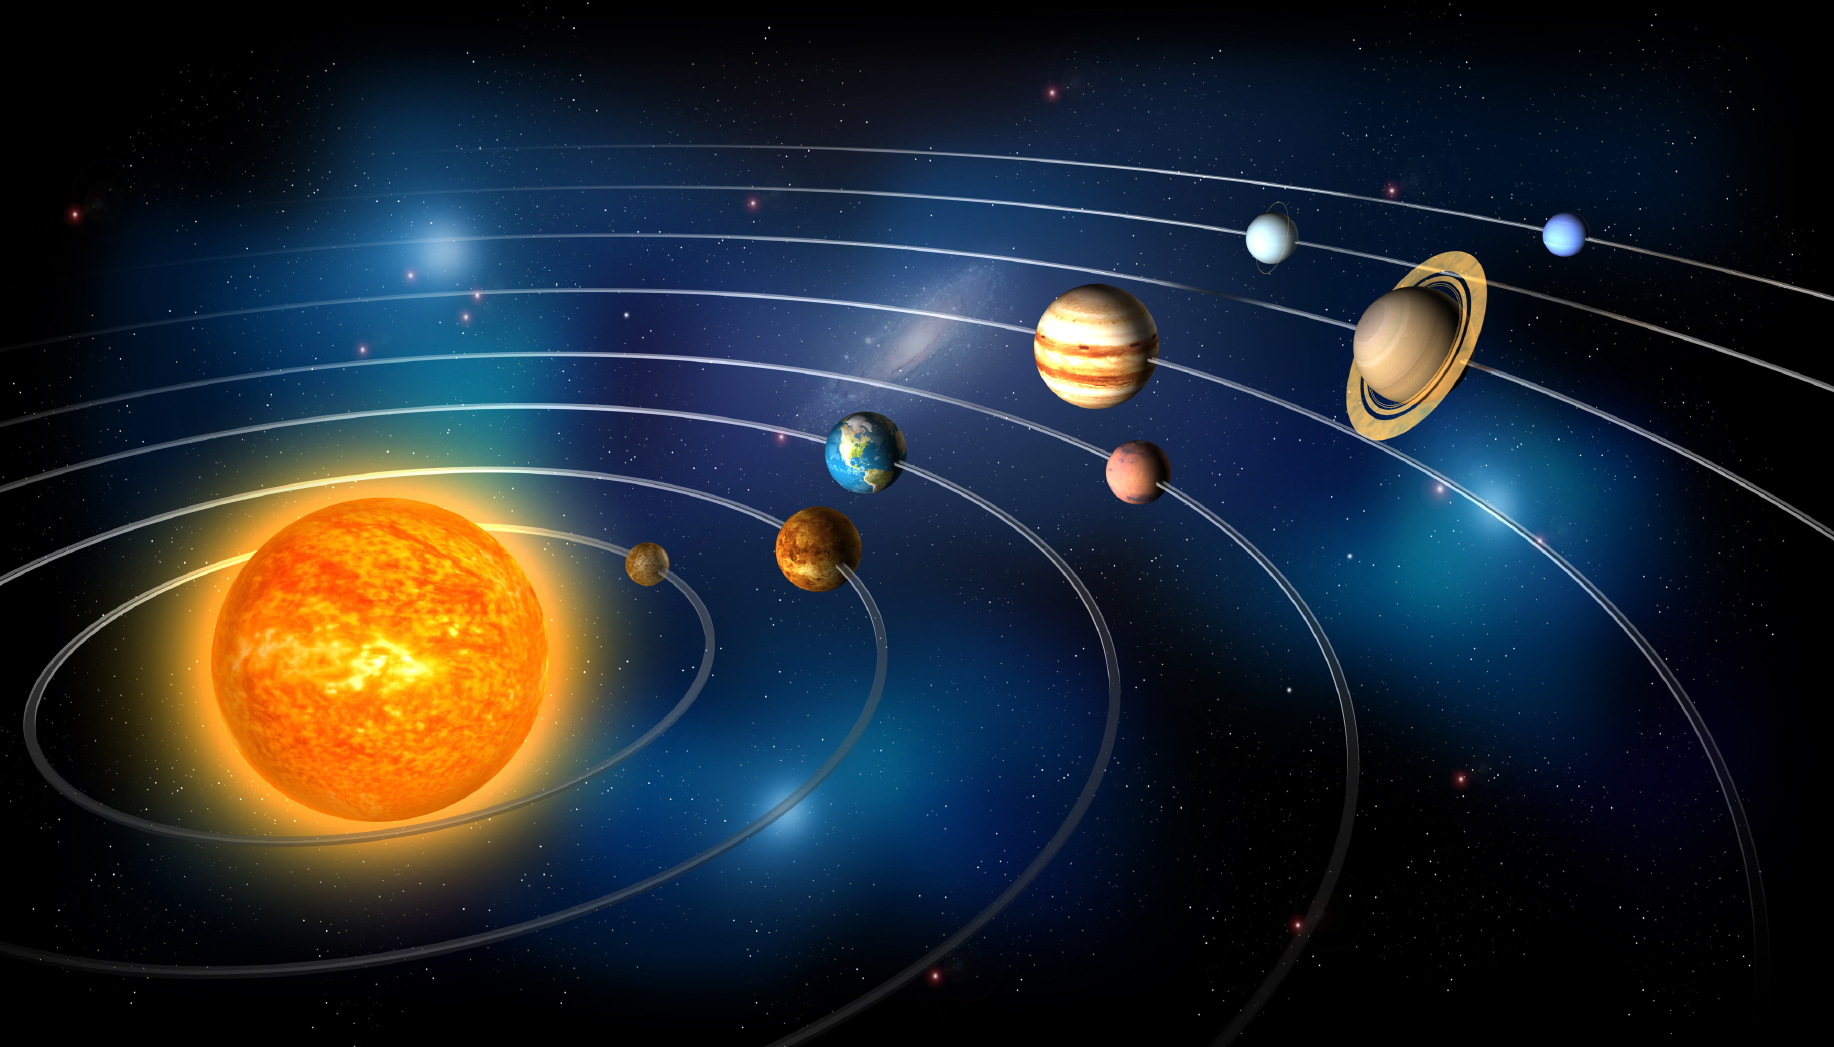 Photo about Solar System nine planets illustration. Illustration of sphere,  globe, astrology - 35943030